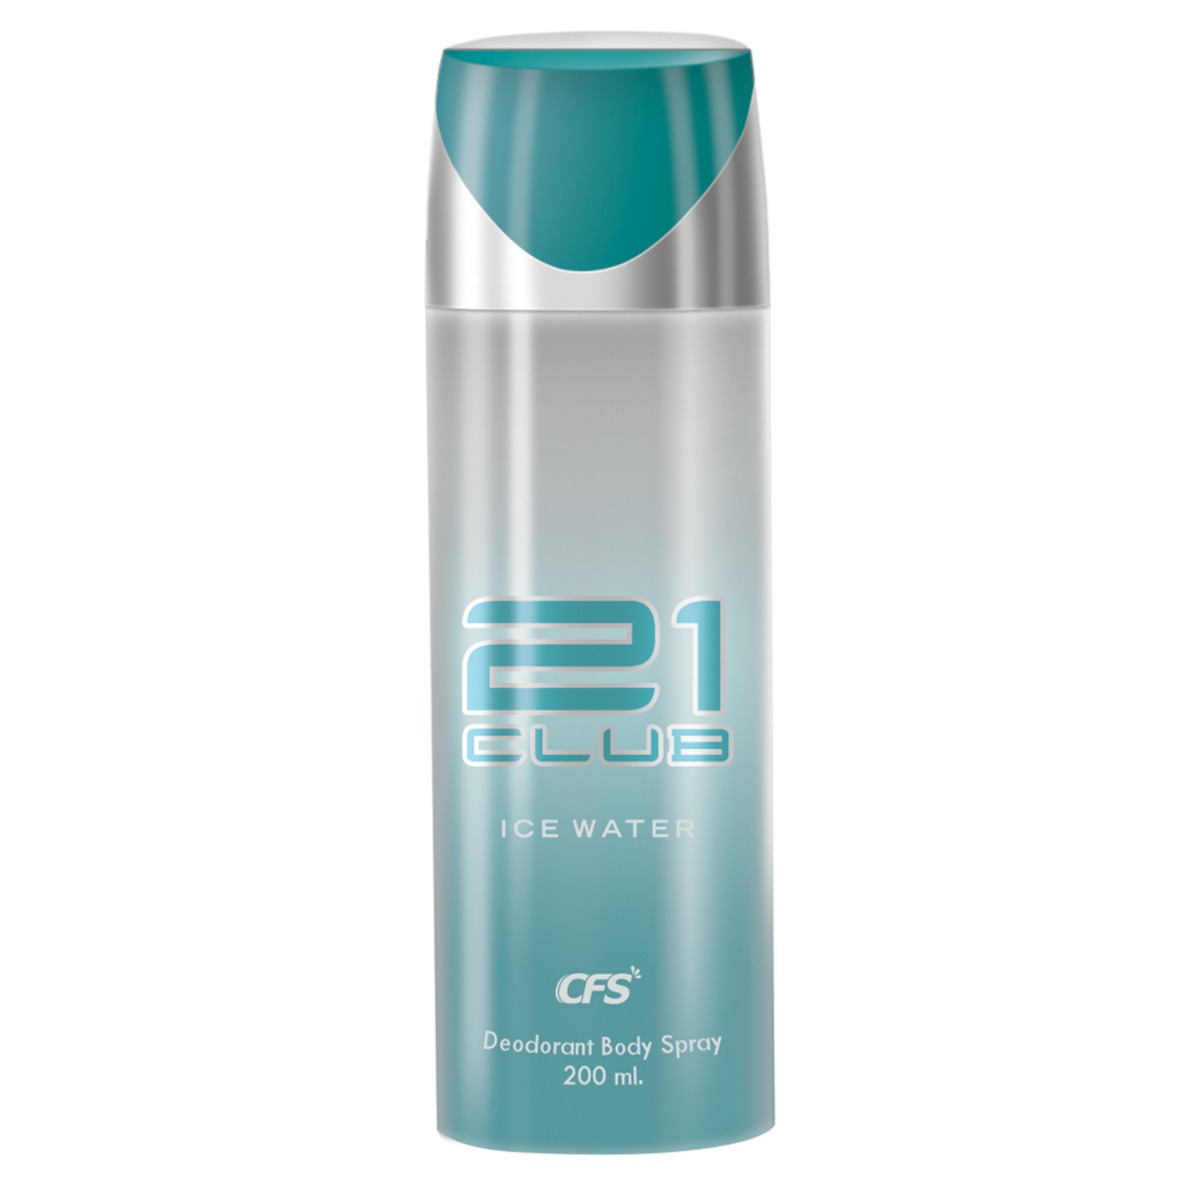 CFS 21 Club Ice Water Long Lasting Best Deodorant Body Spray, 200ml